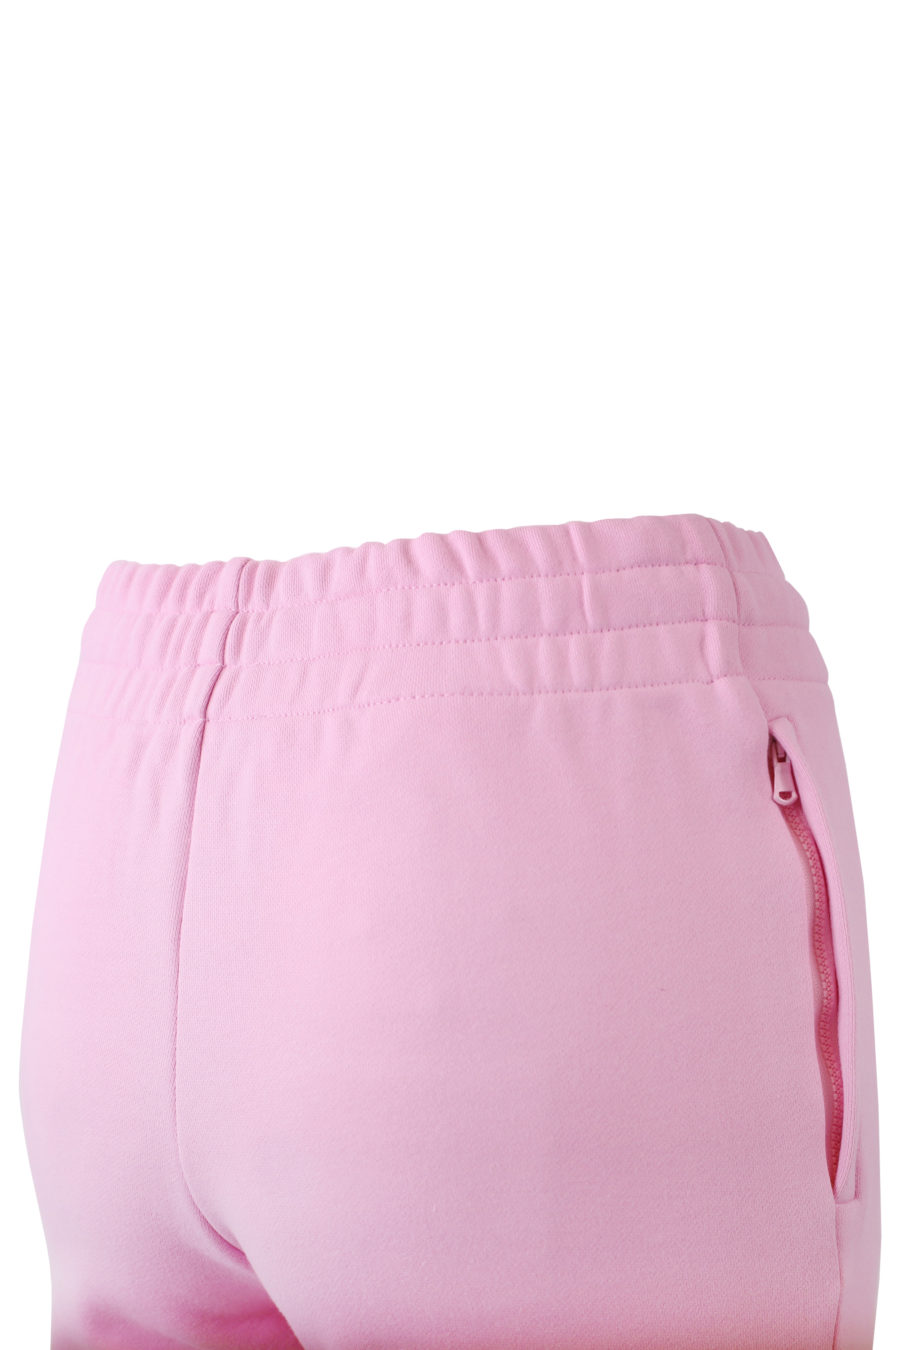 Pantalón de color rosa con logo de cristales - IMG 7286 copia